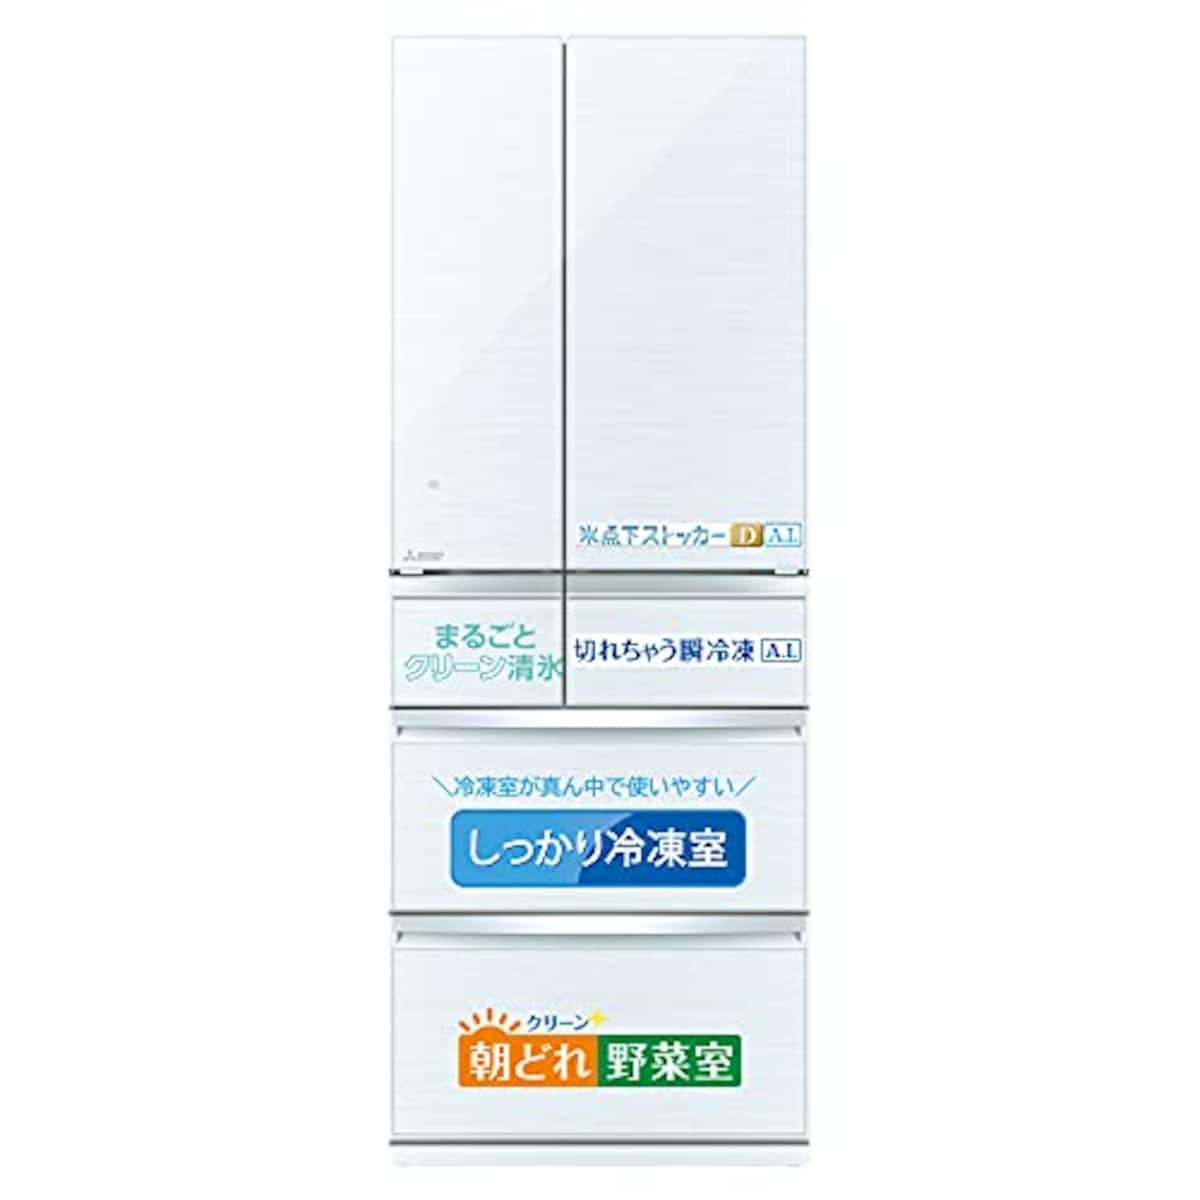 MITSUBISHI（三菱電機）の置けるスマート大容量 WXシリーズ 6ドア冷蔵庫MR-WX60F-W | 価格比較・レビュー評価